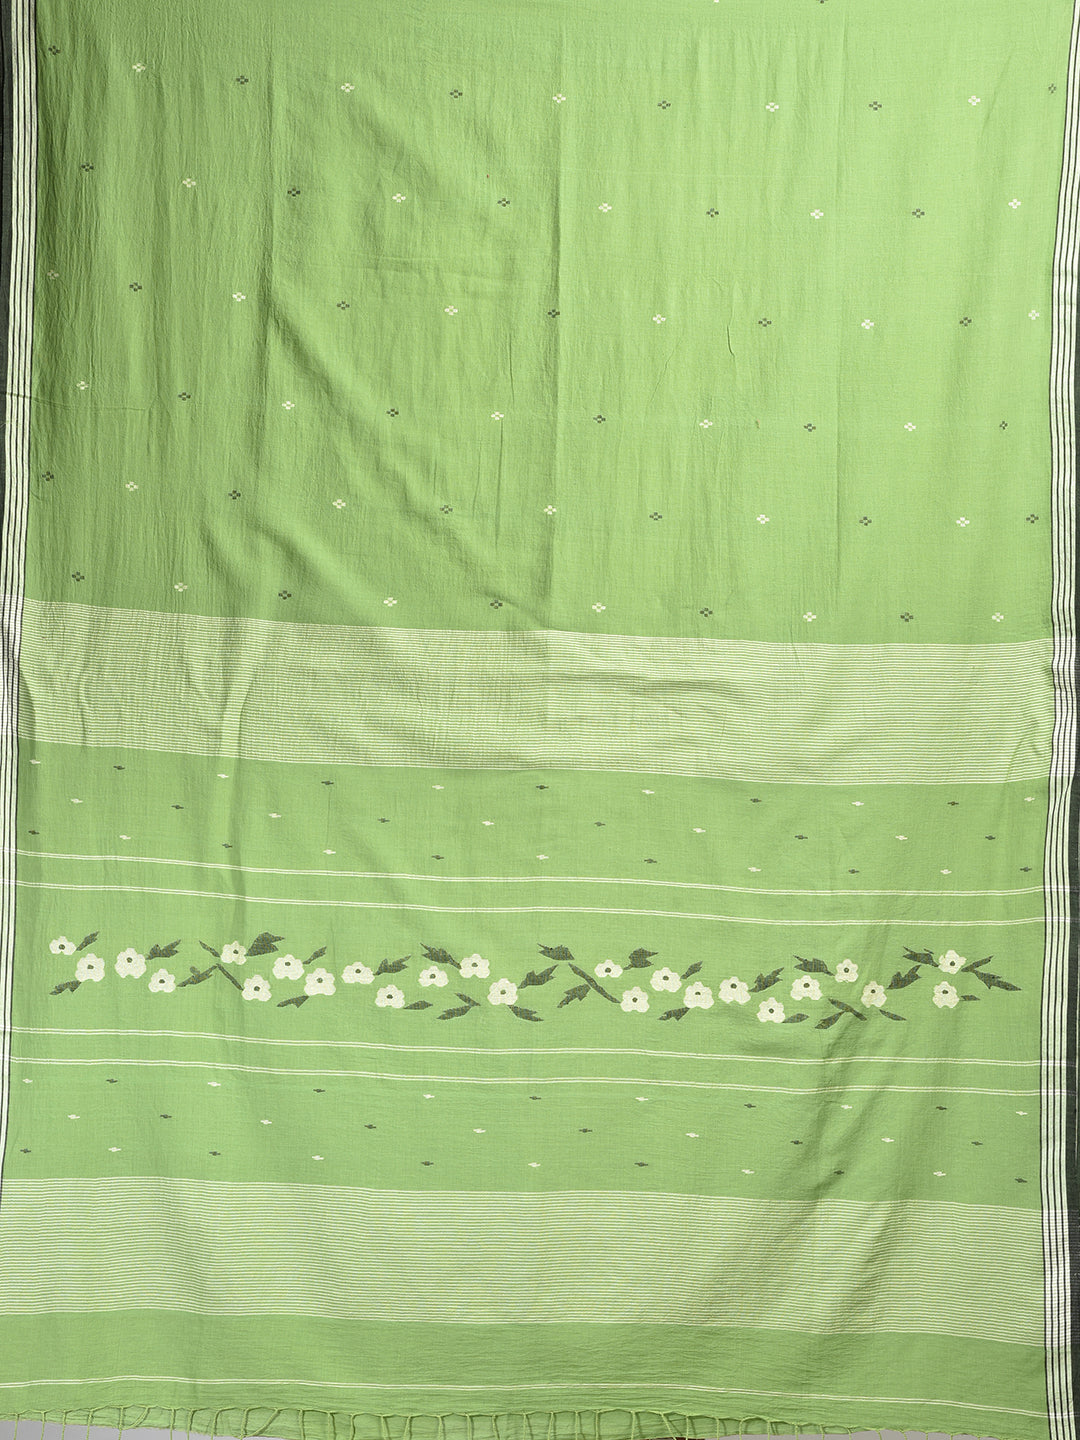 Women's Green  pure Handspun Cotton Hand woven saree - Sajasajo